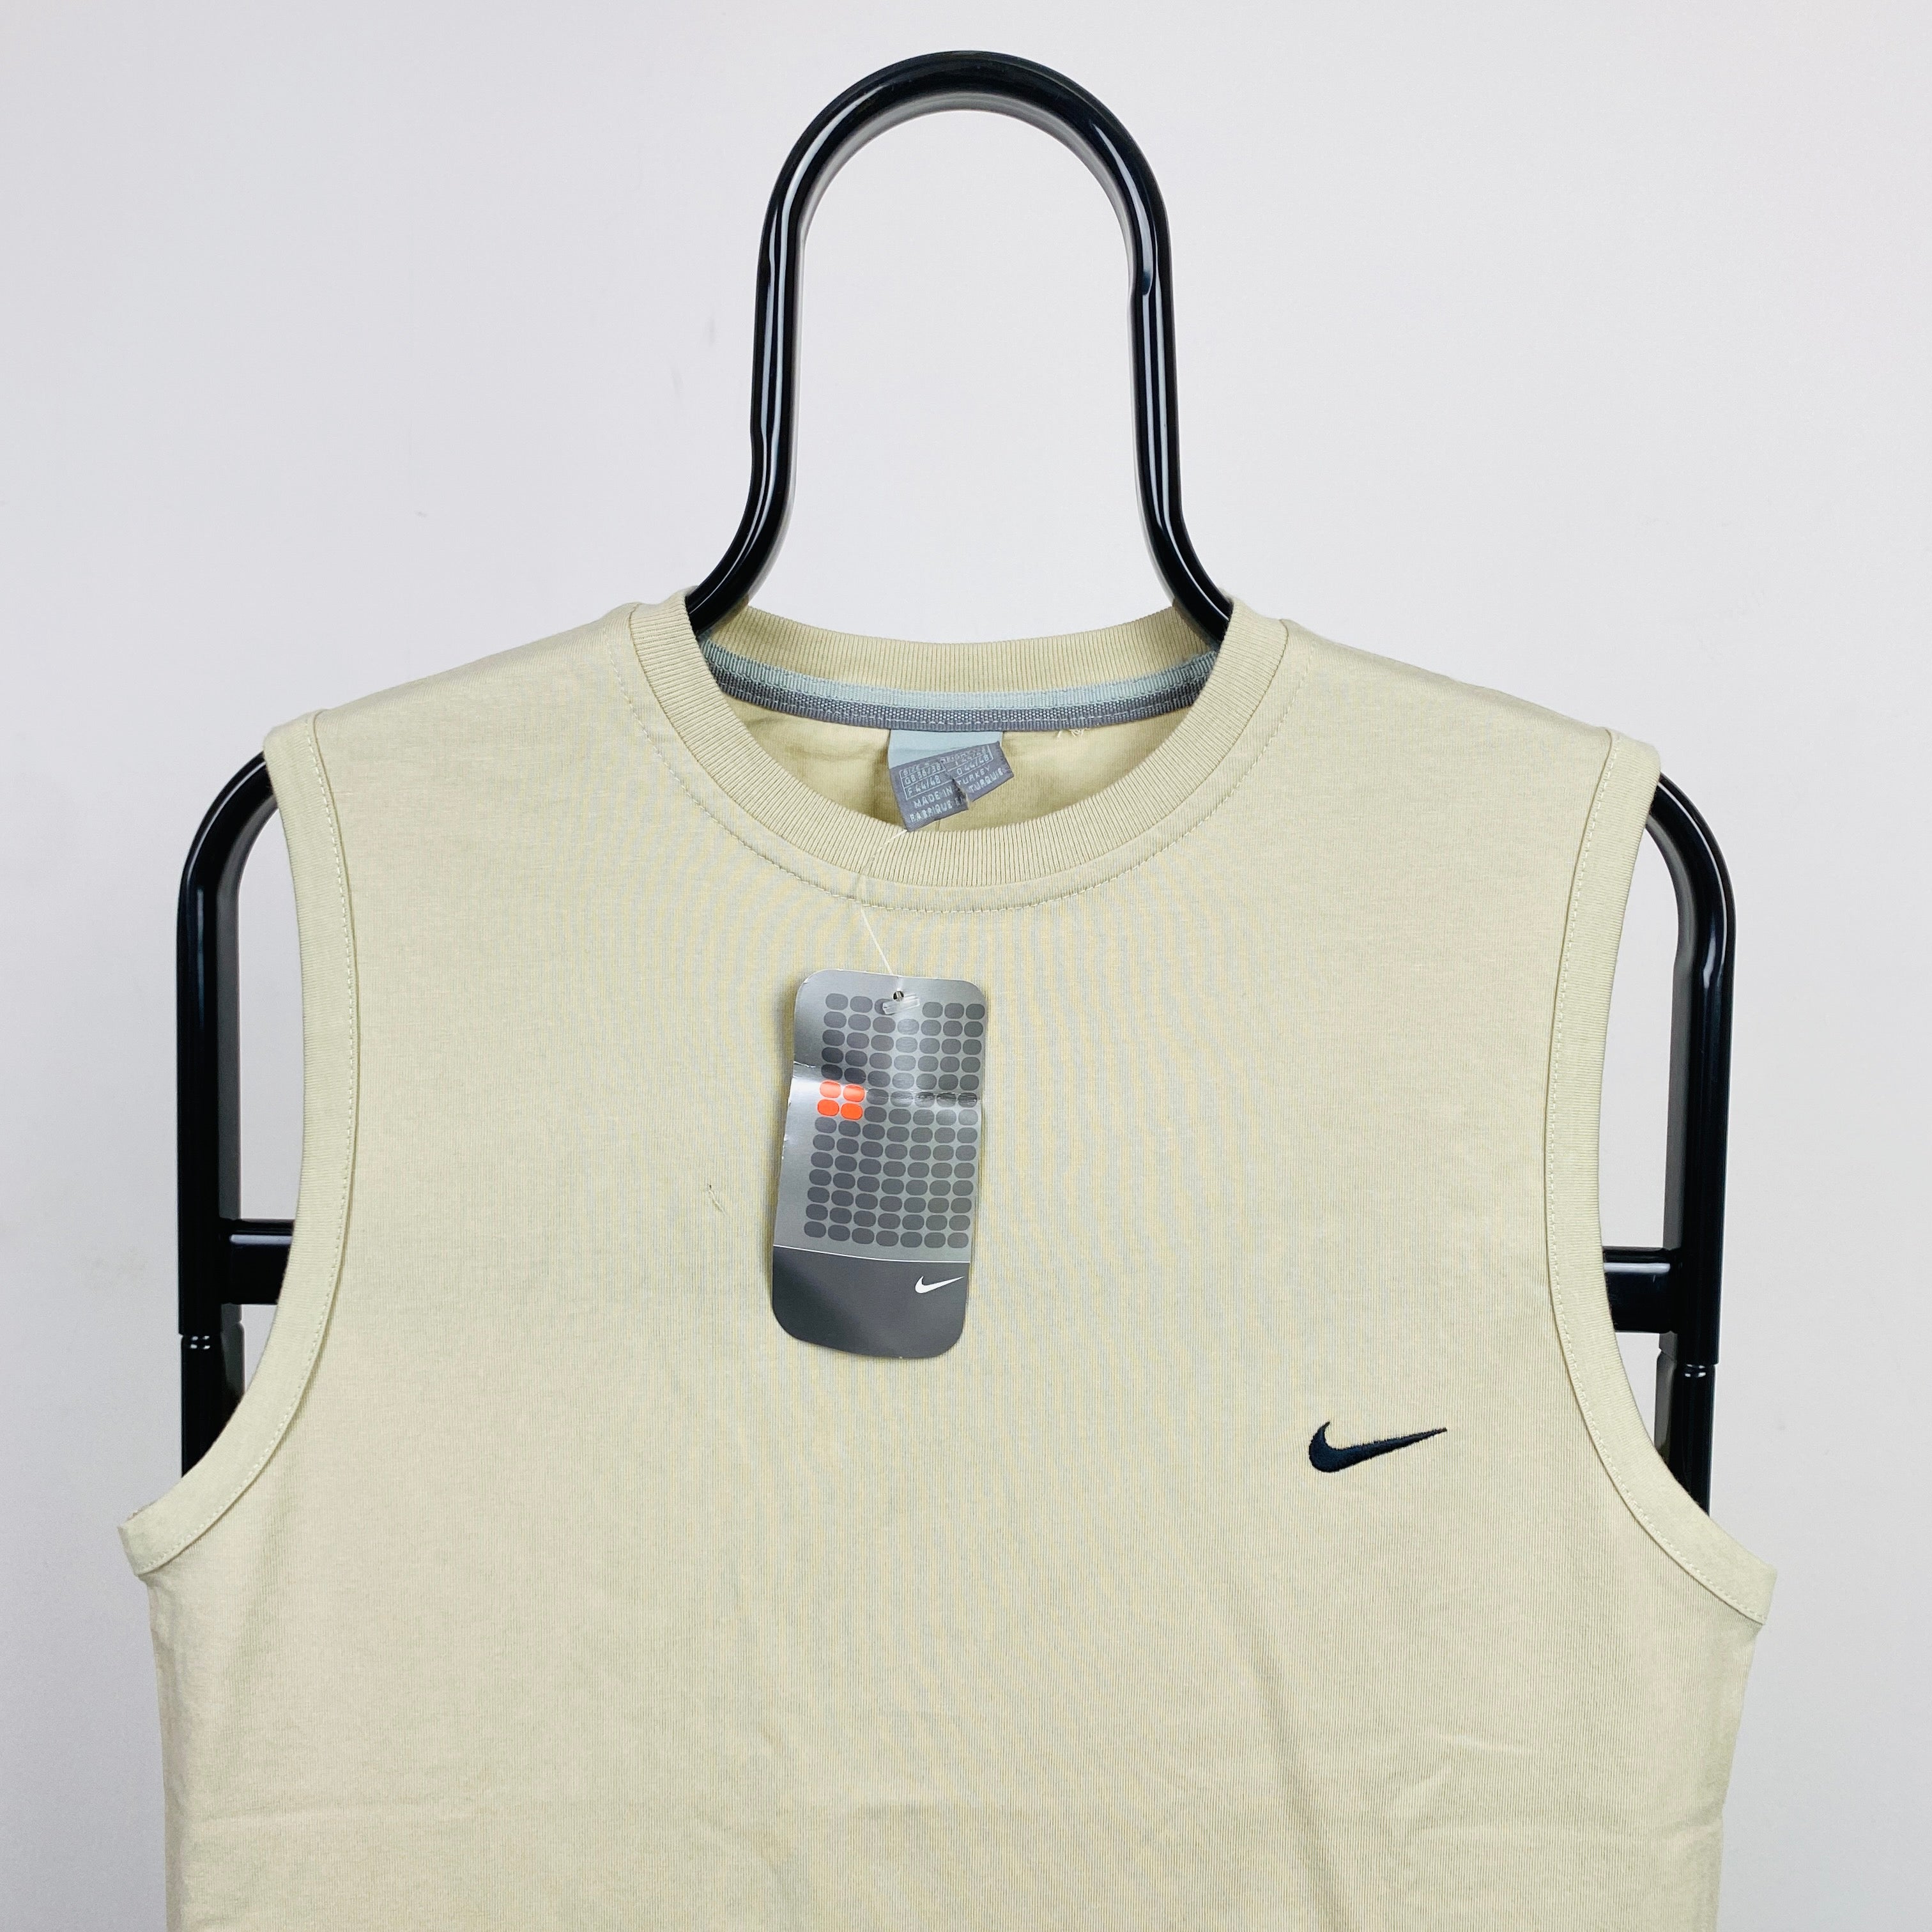 00s Nike Vest T-Shirt Brown Large